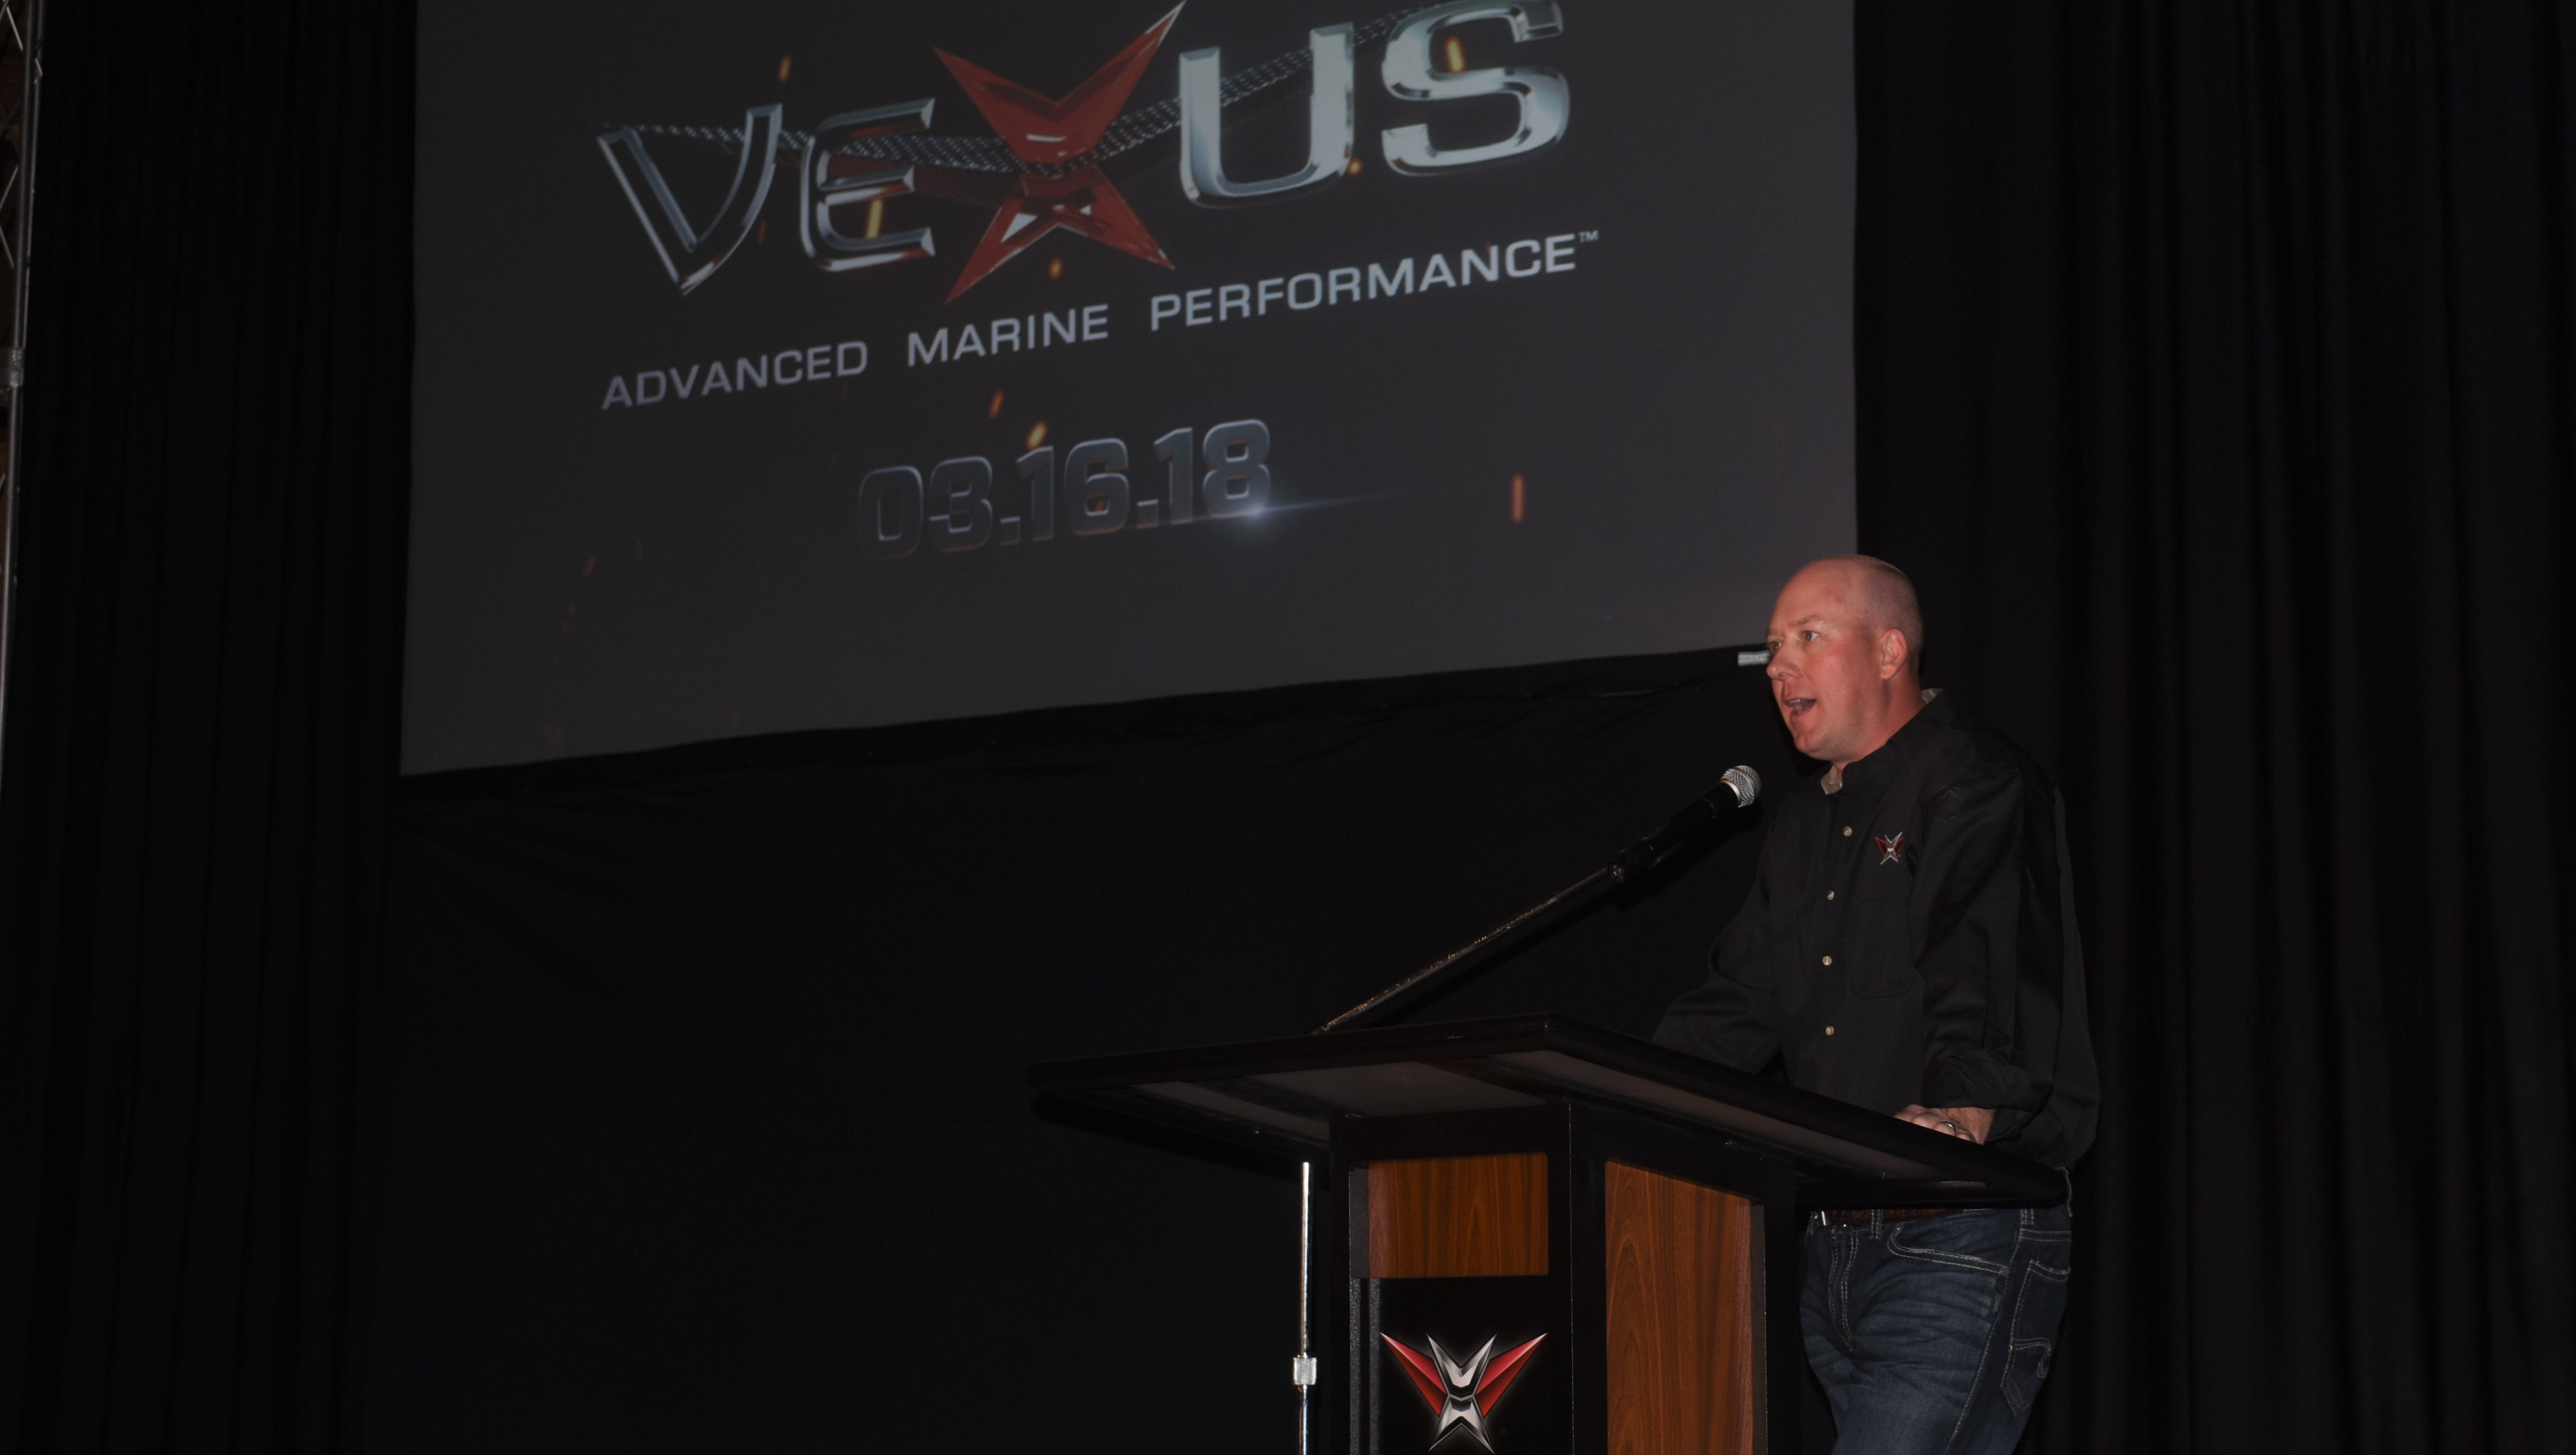 Keith Daffron, president of Vexus Boats, announces the company